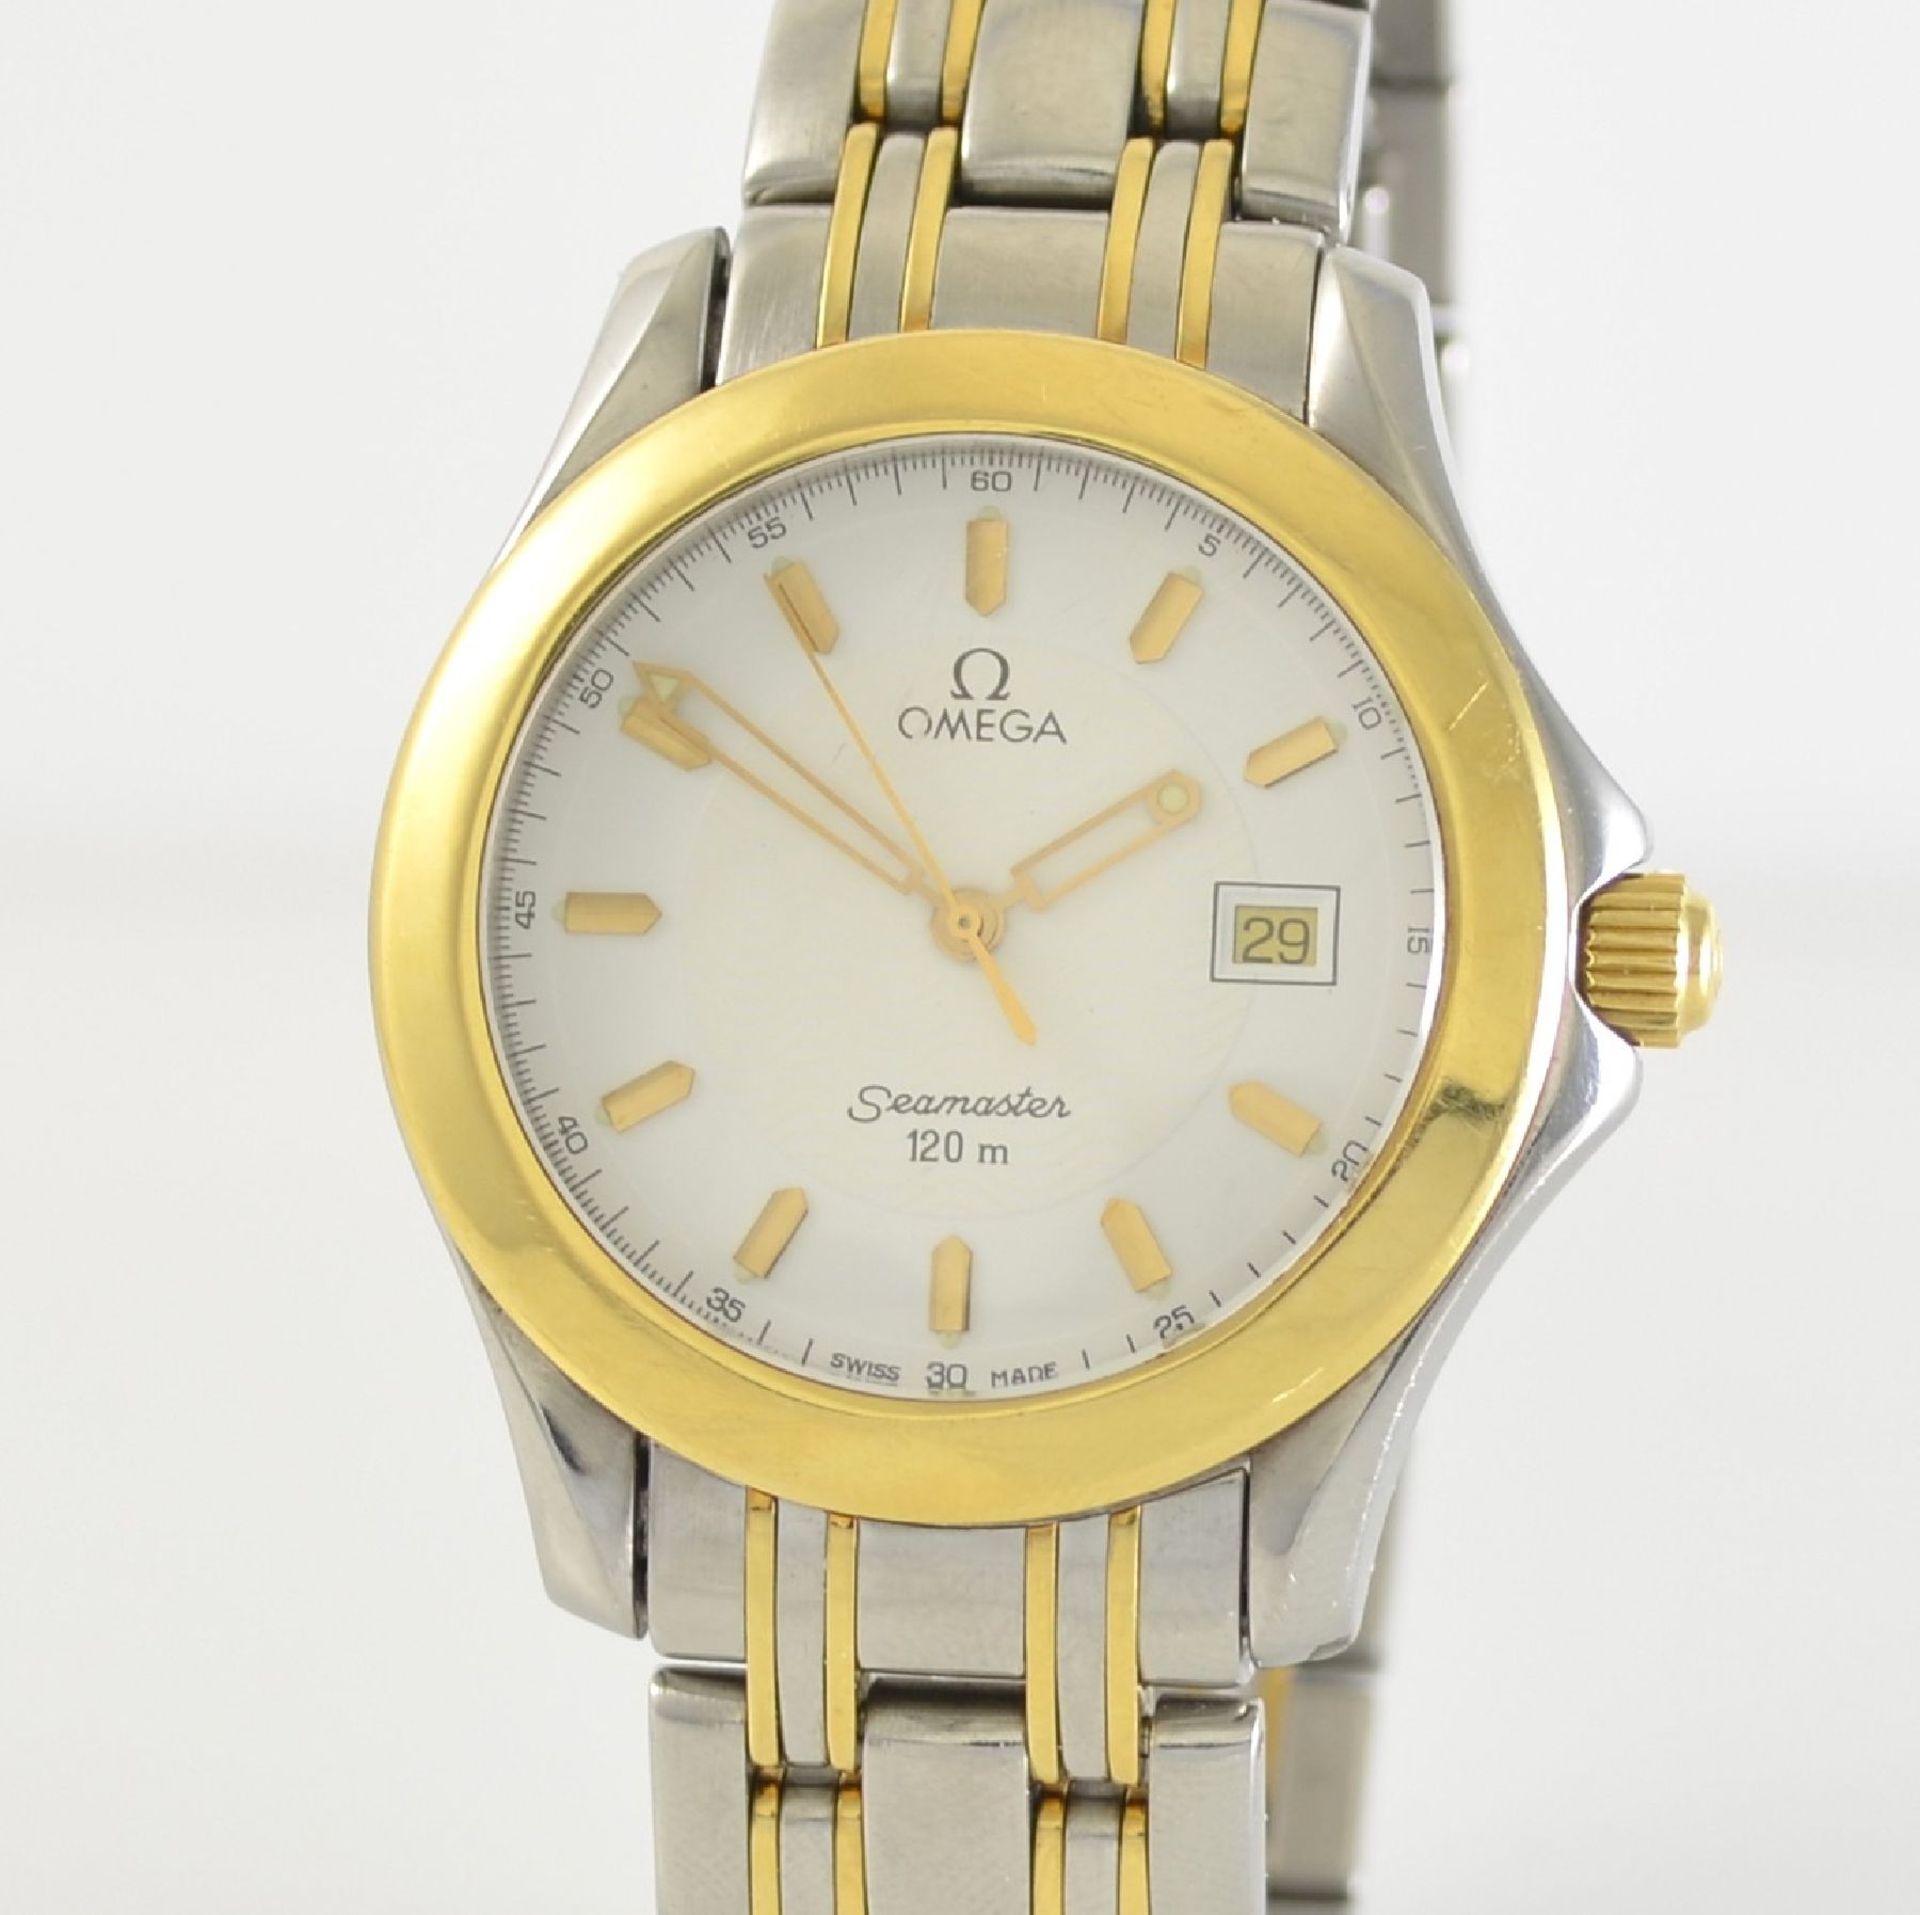 OMEGA gents wristwatch series Seamaster, Switzerland around 1996, 168.1501/196.1501, stainless - Image 4 of 6